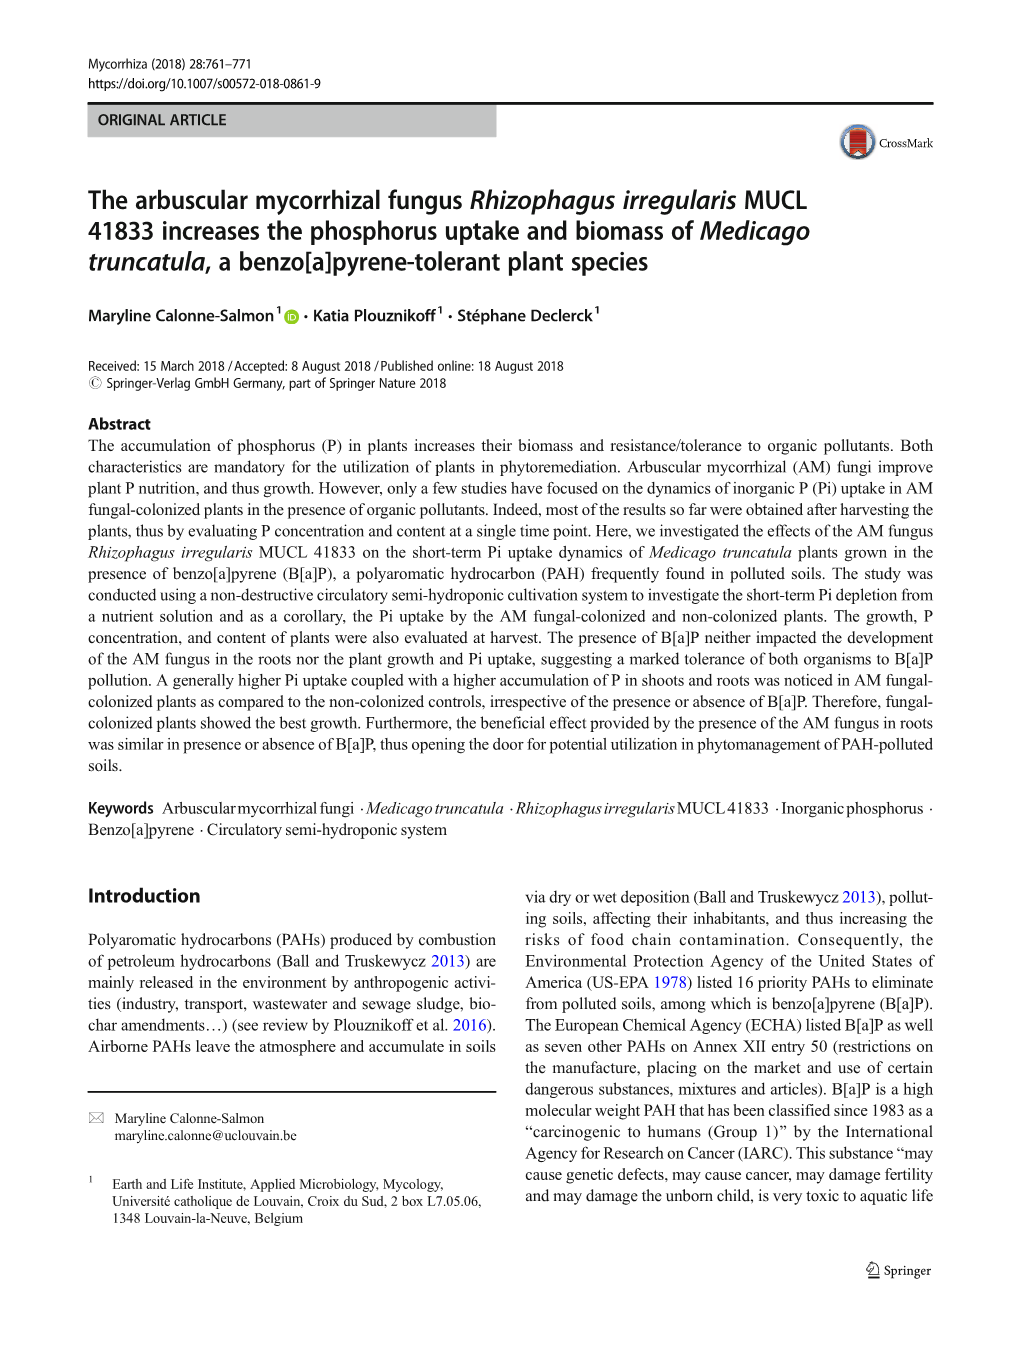 The Arbuscular Mycorrhizal Fungus Rhizophagus Irregularis MUCL